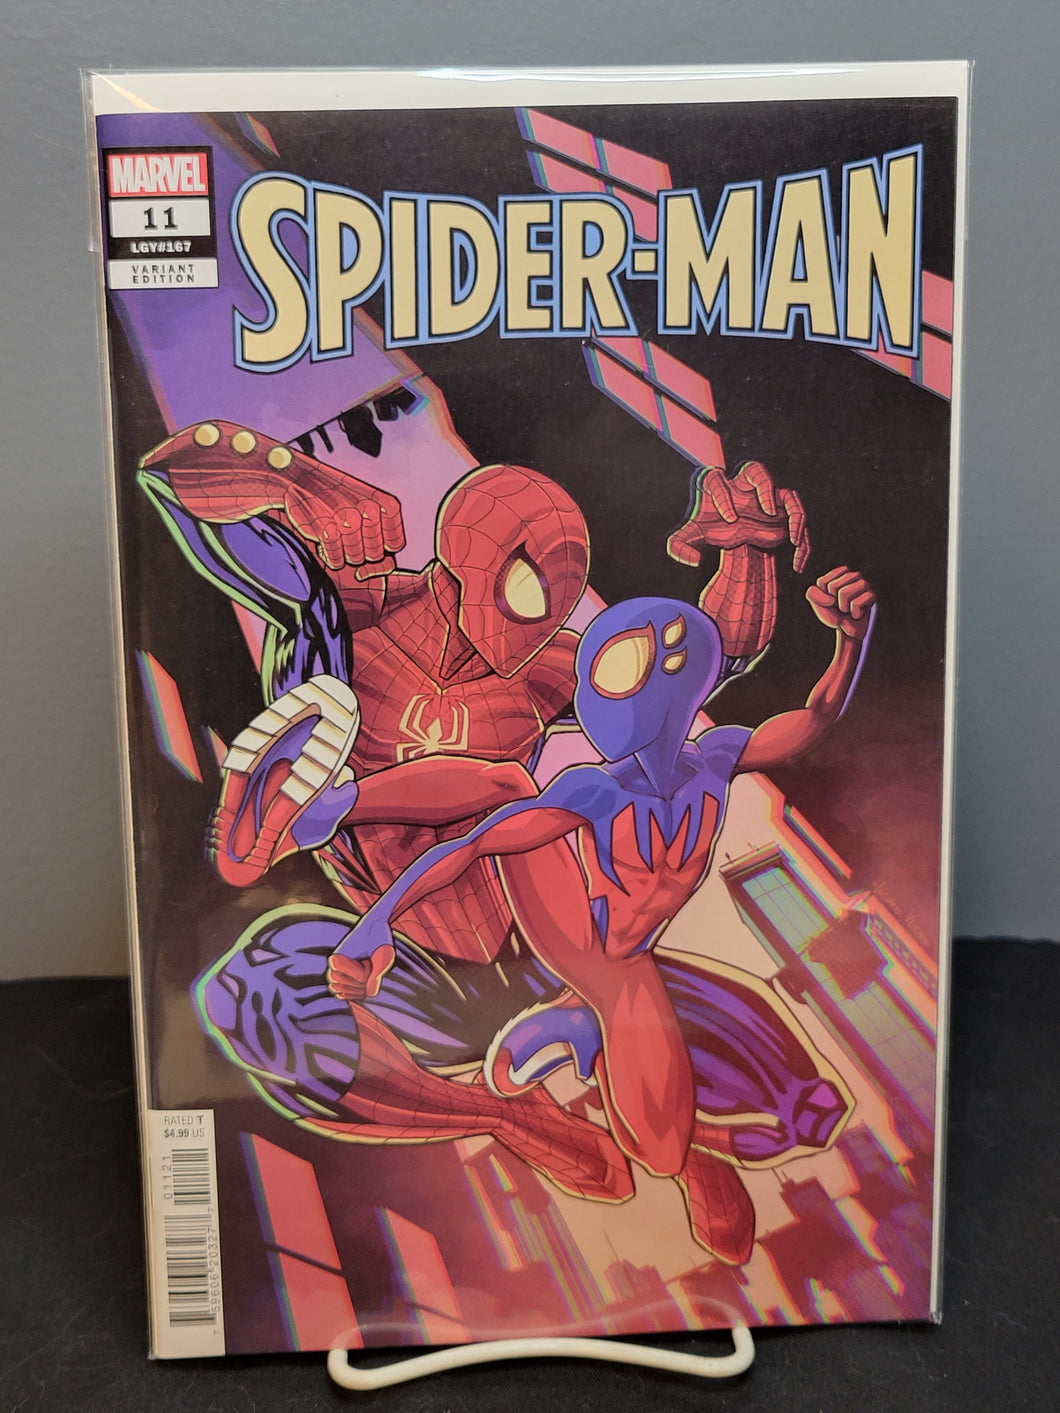 Spider-Man #11 Variant